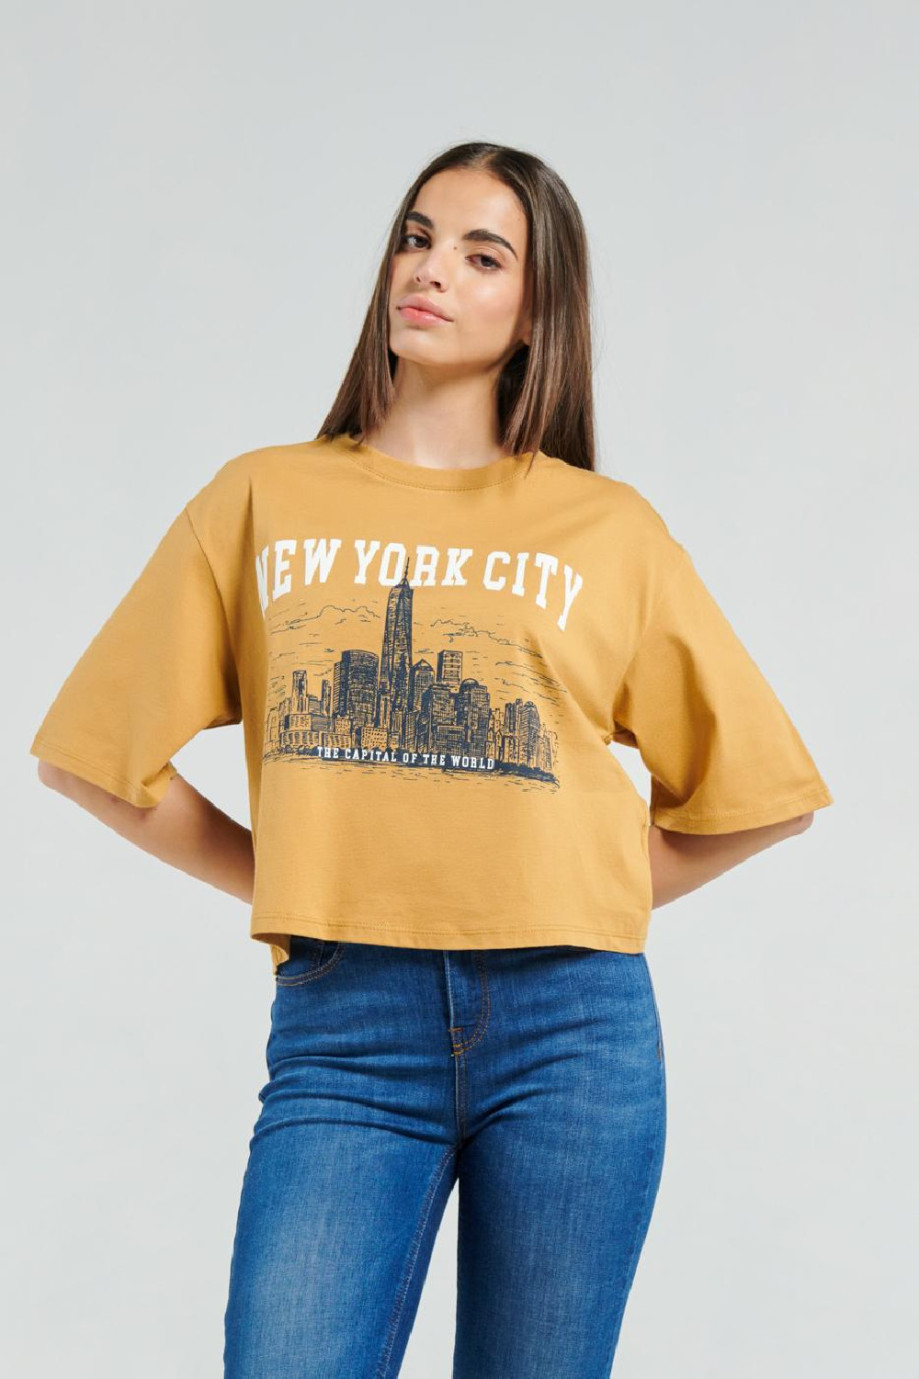 Camiseta crop top kaky clara oversize con diseño college de New York